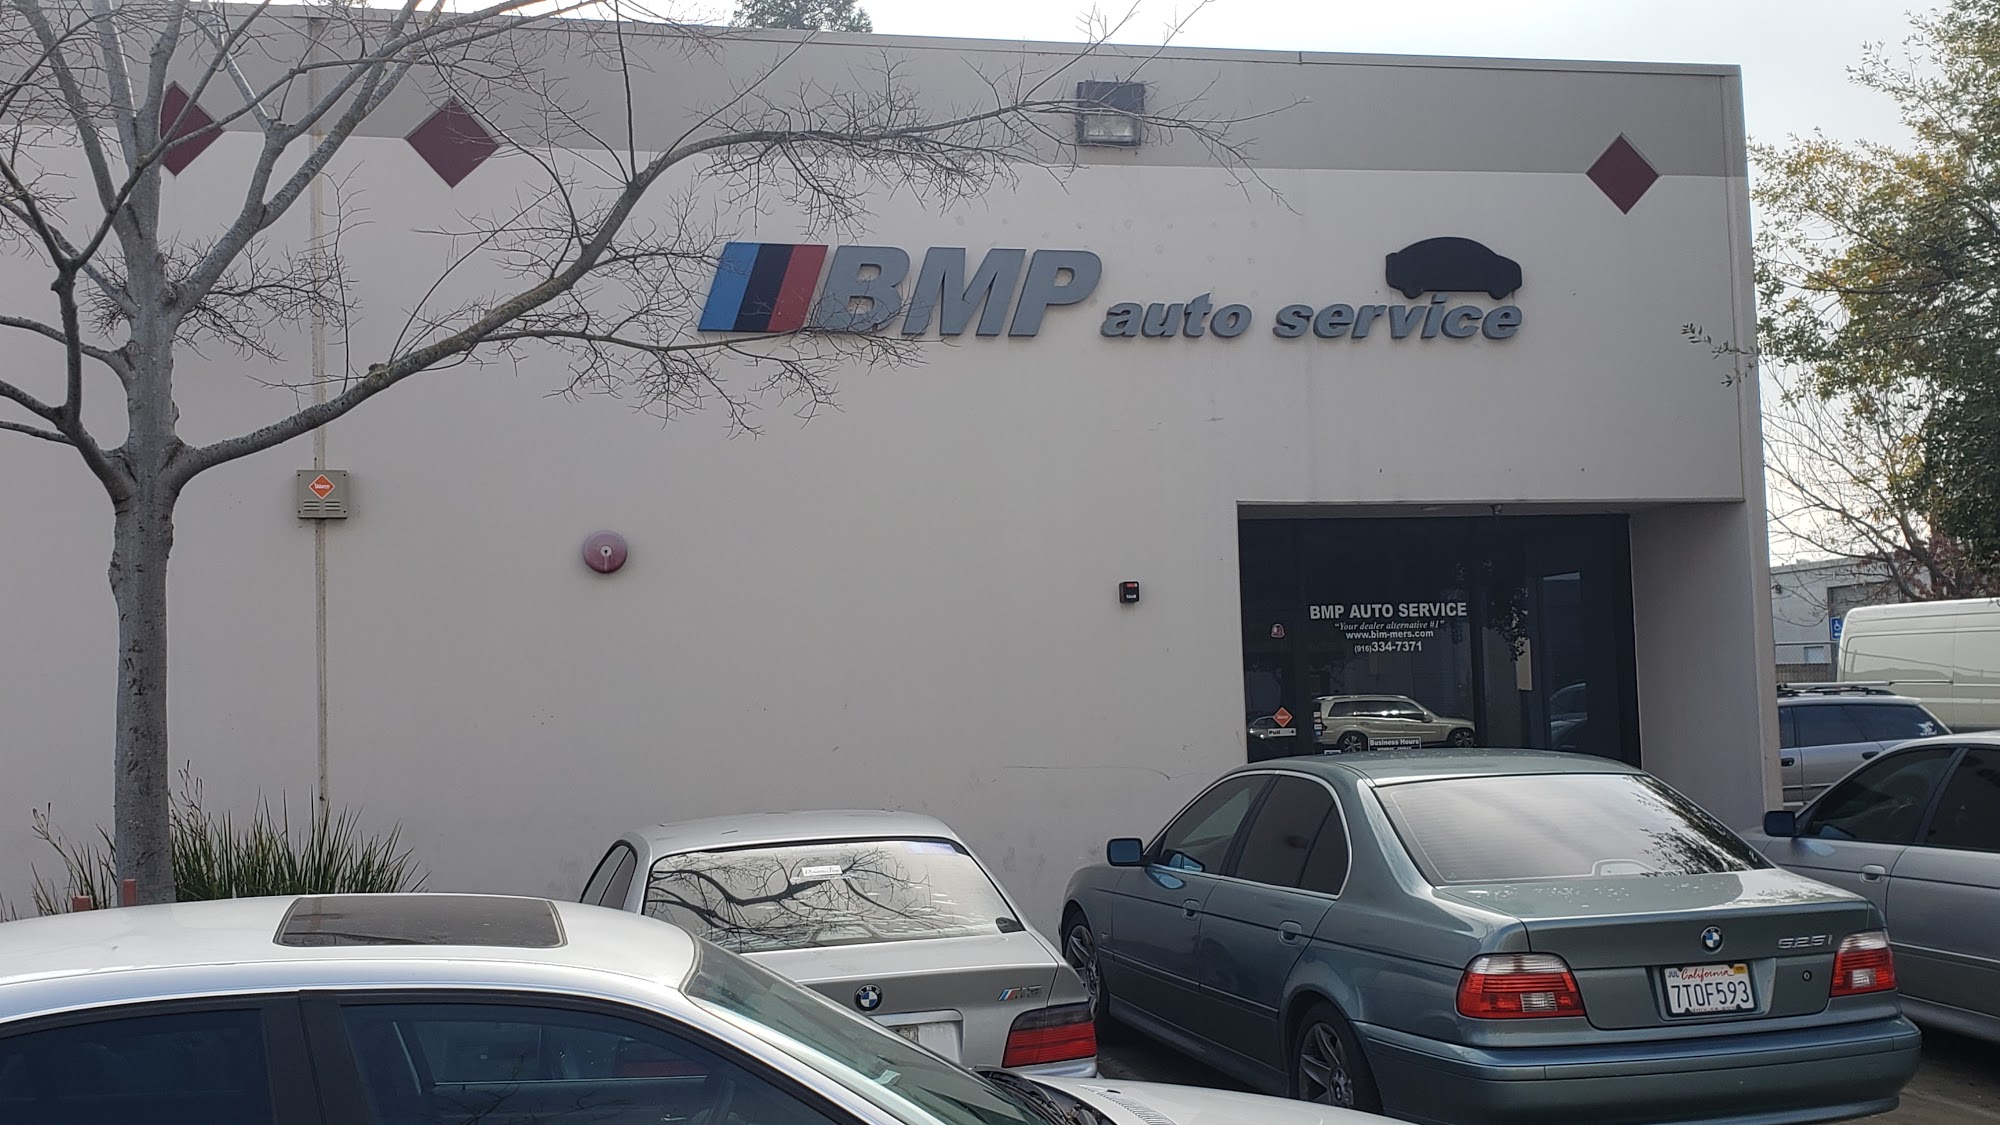 BMP Auto Service